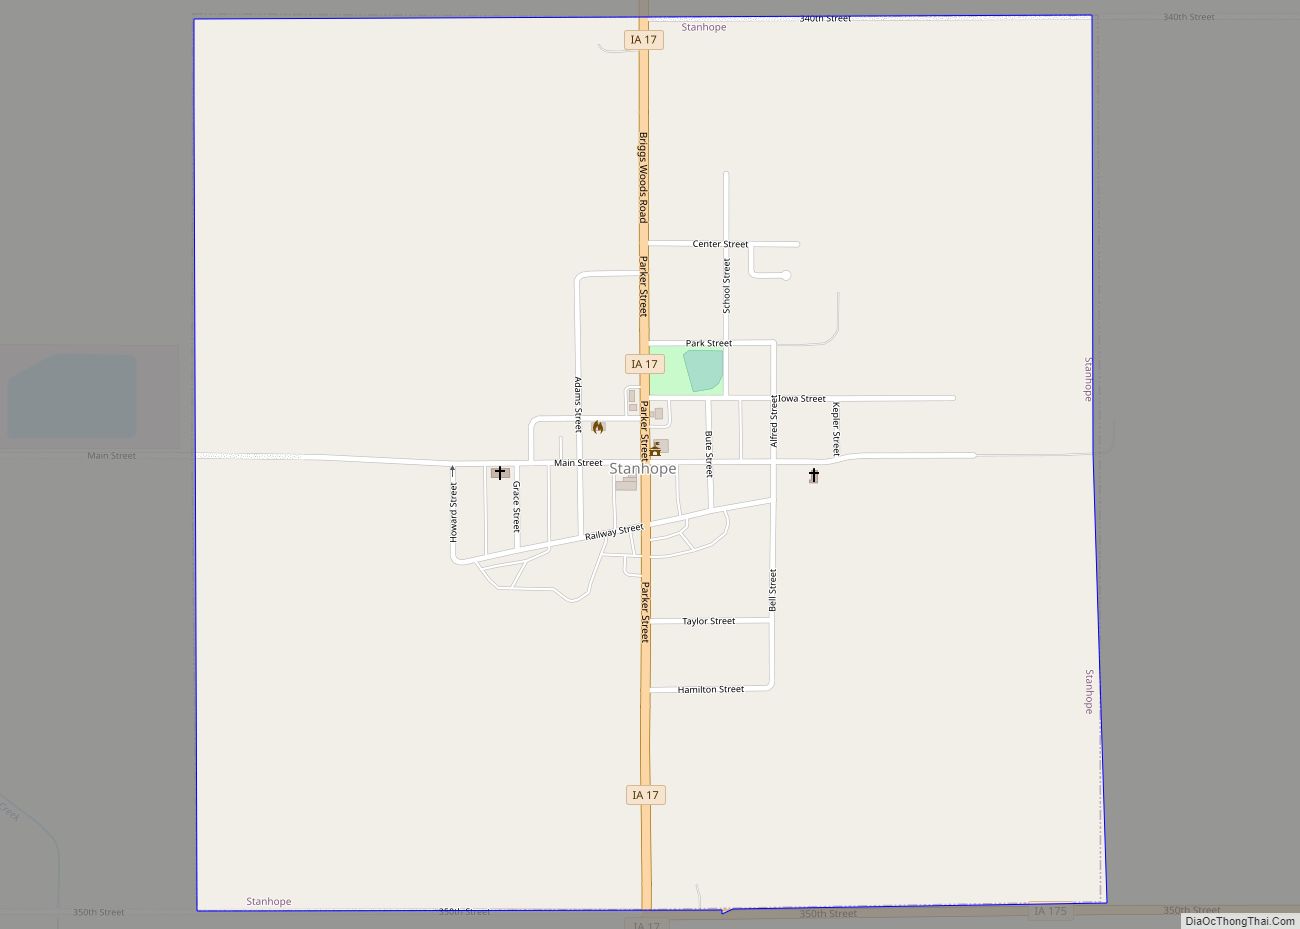 Map of Stanhope city